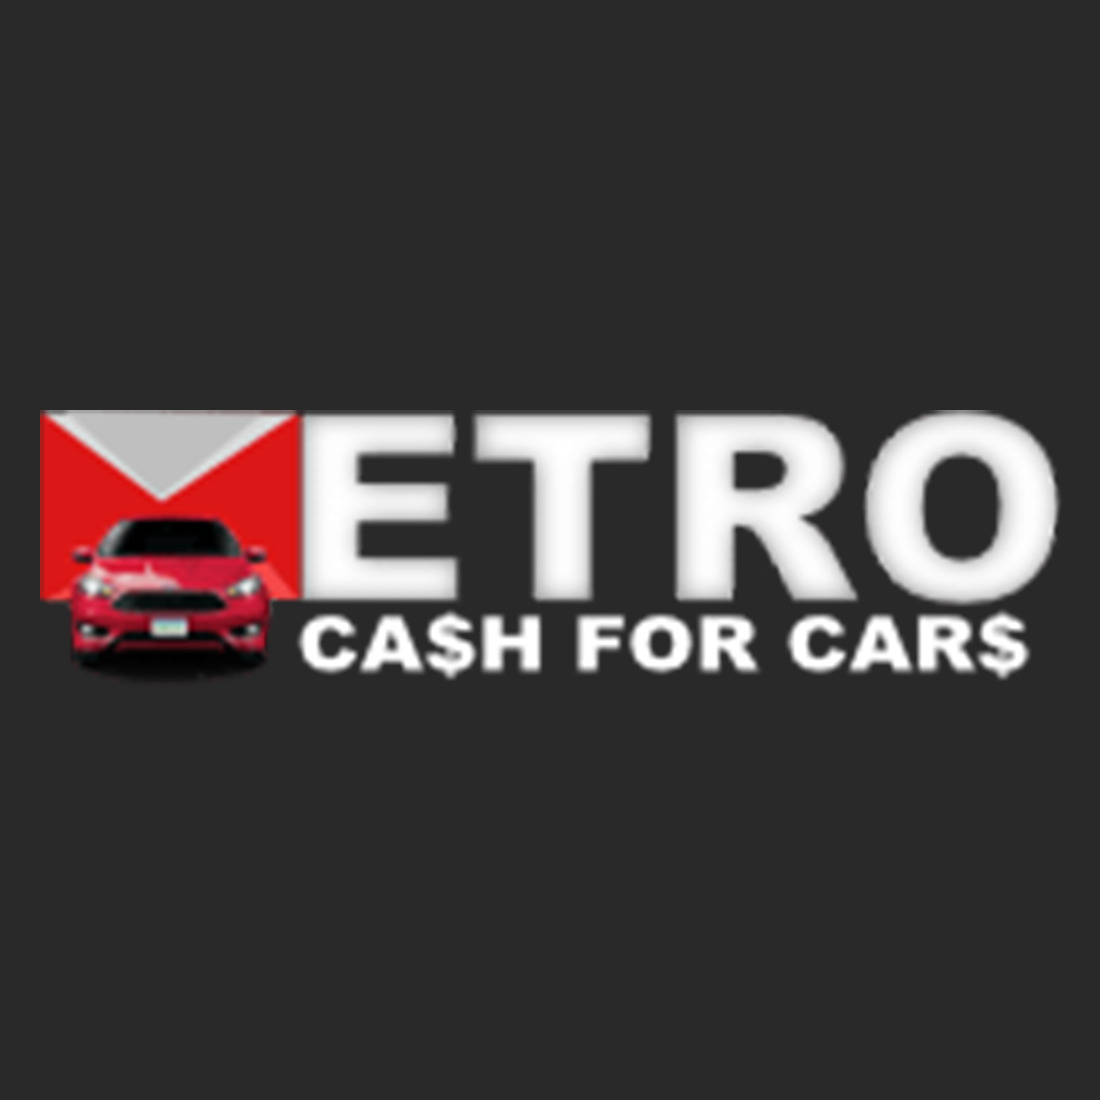 Metro Cash for Cars